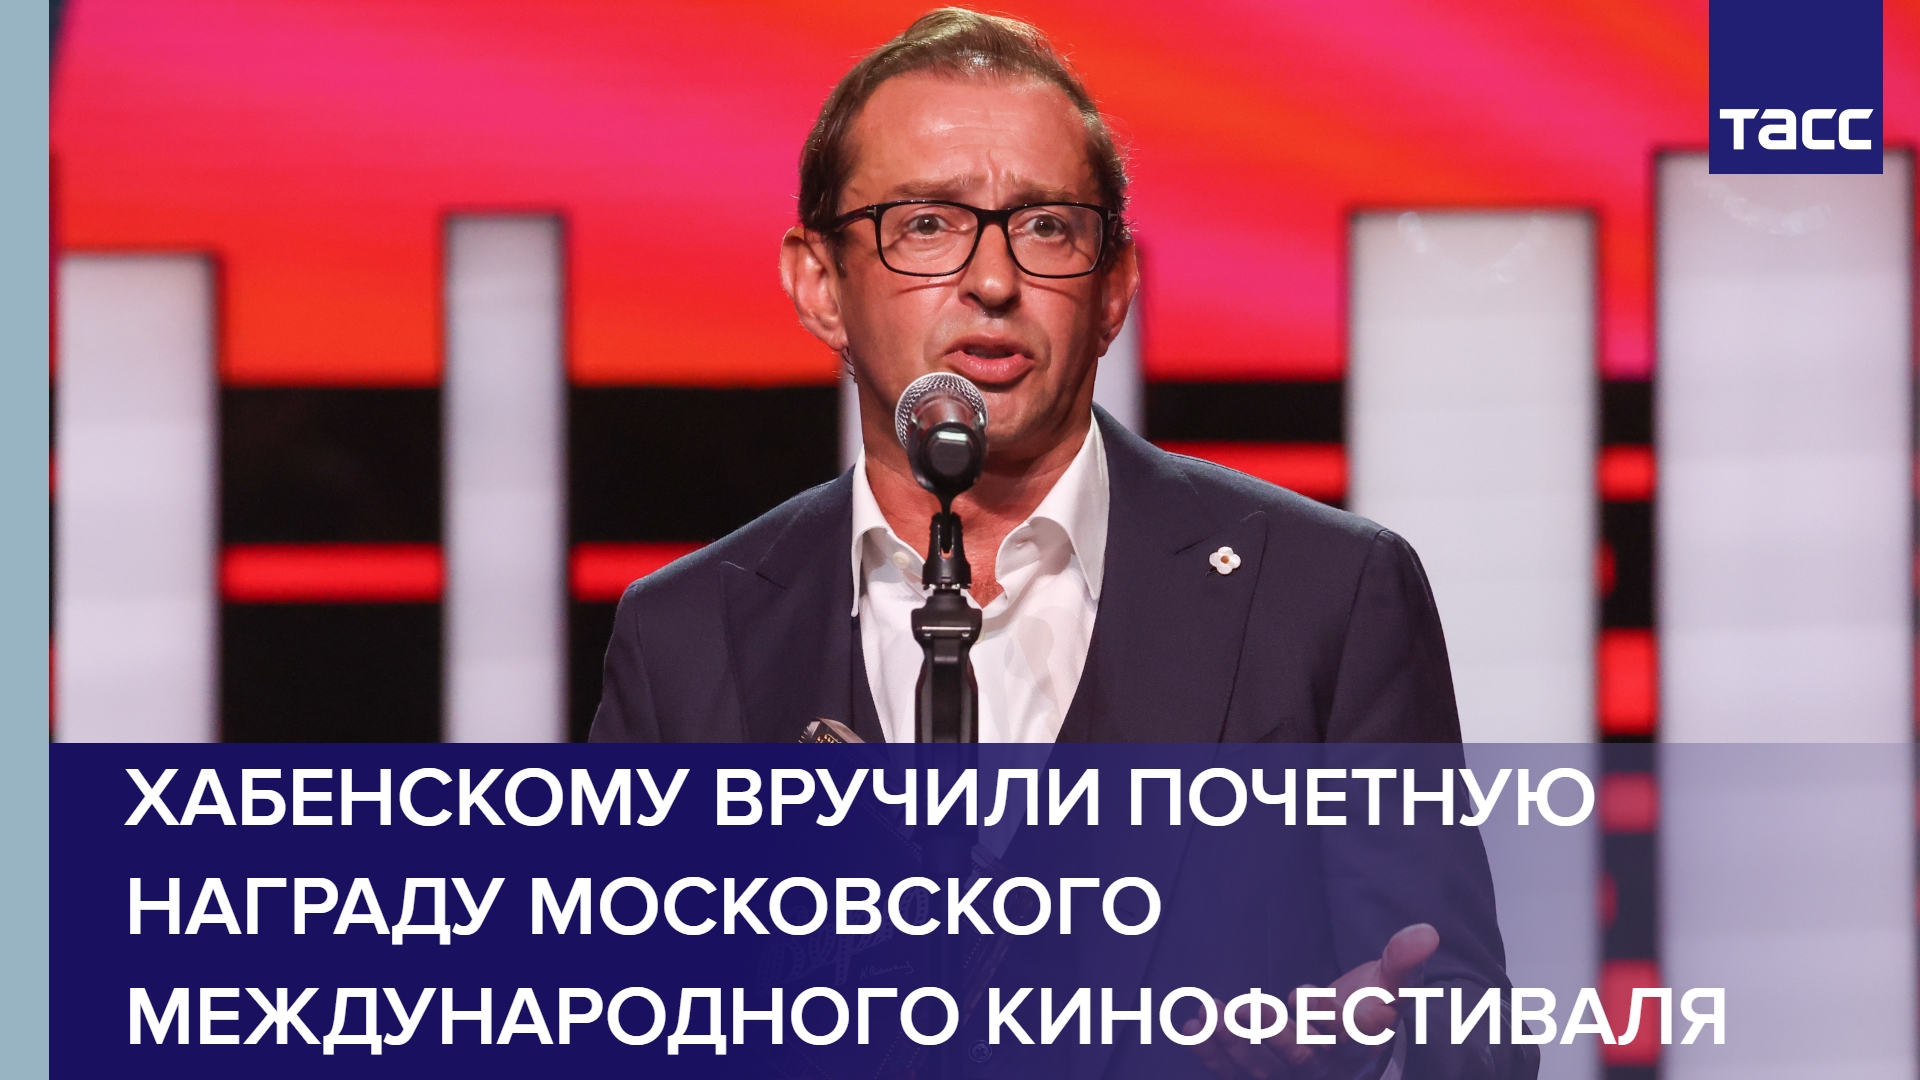 Константину Хабенскому вручили почетную награду ММКФ